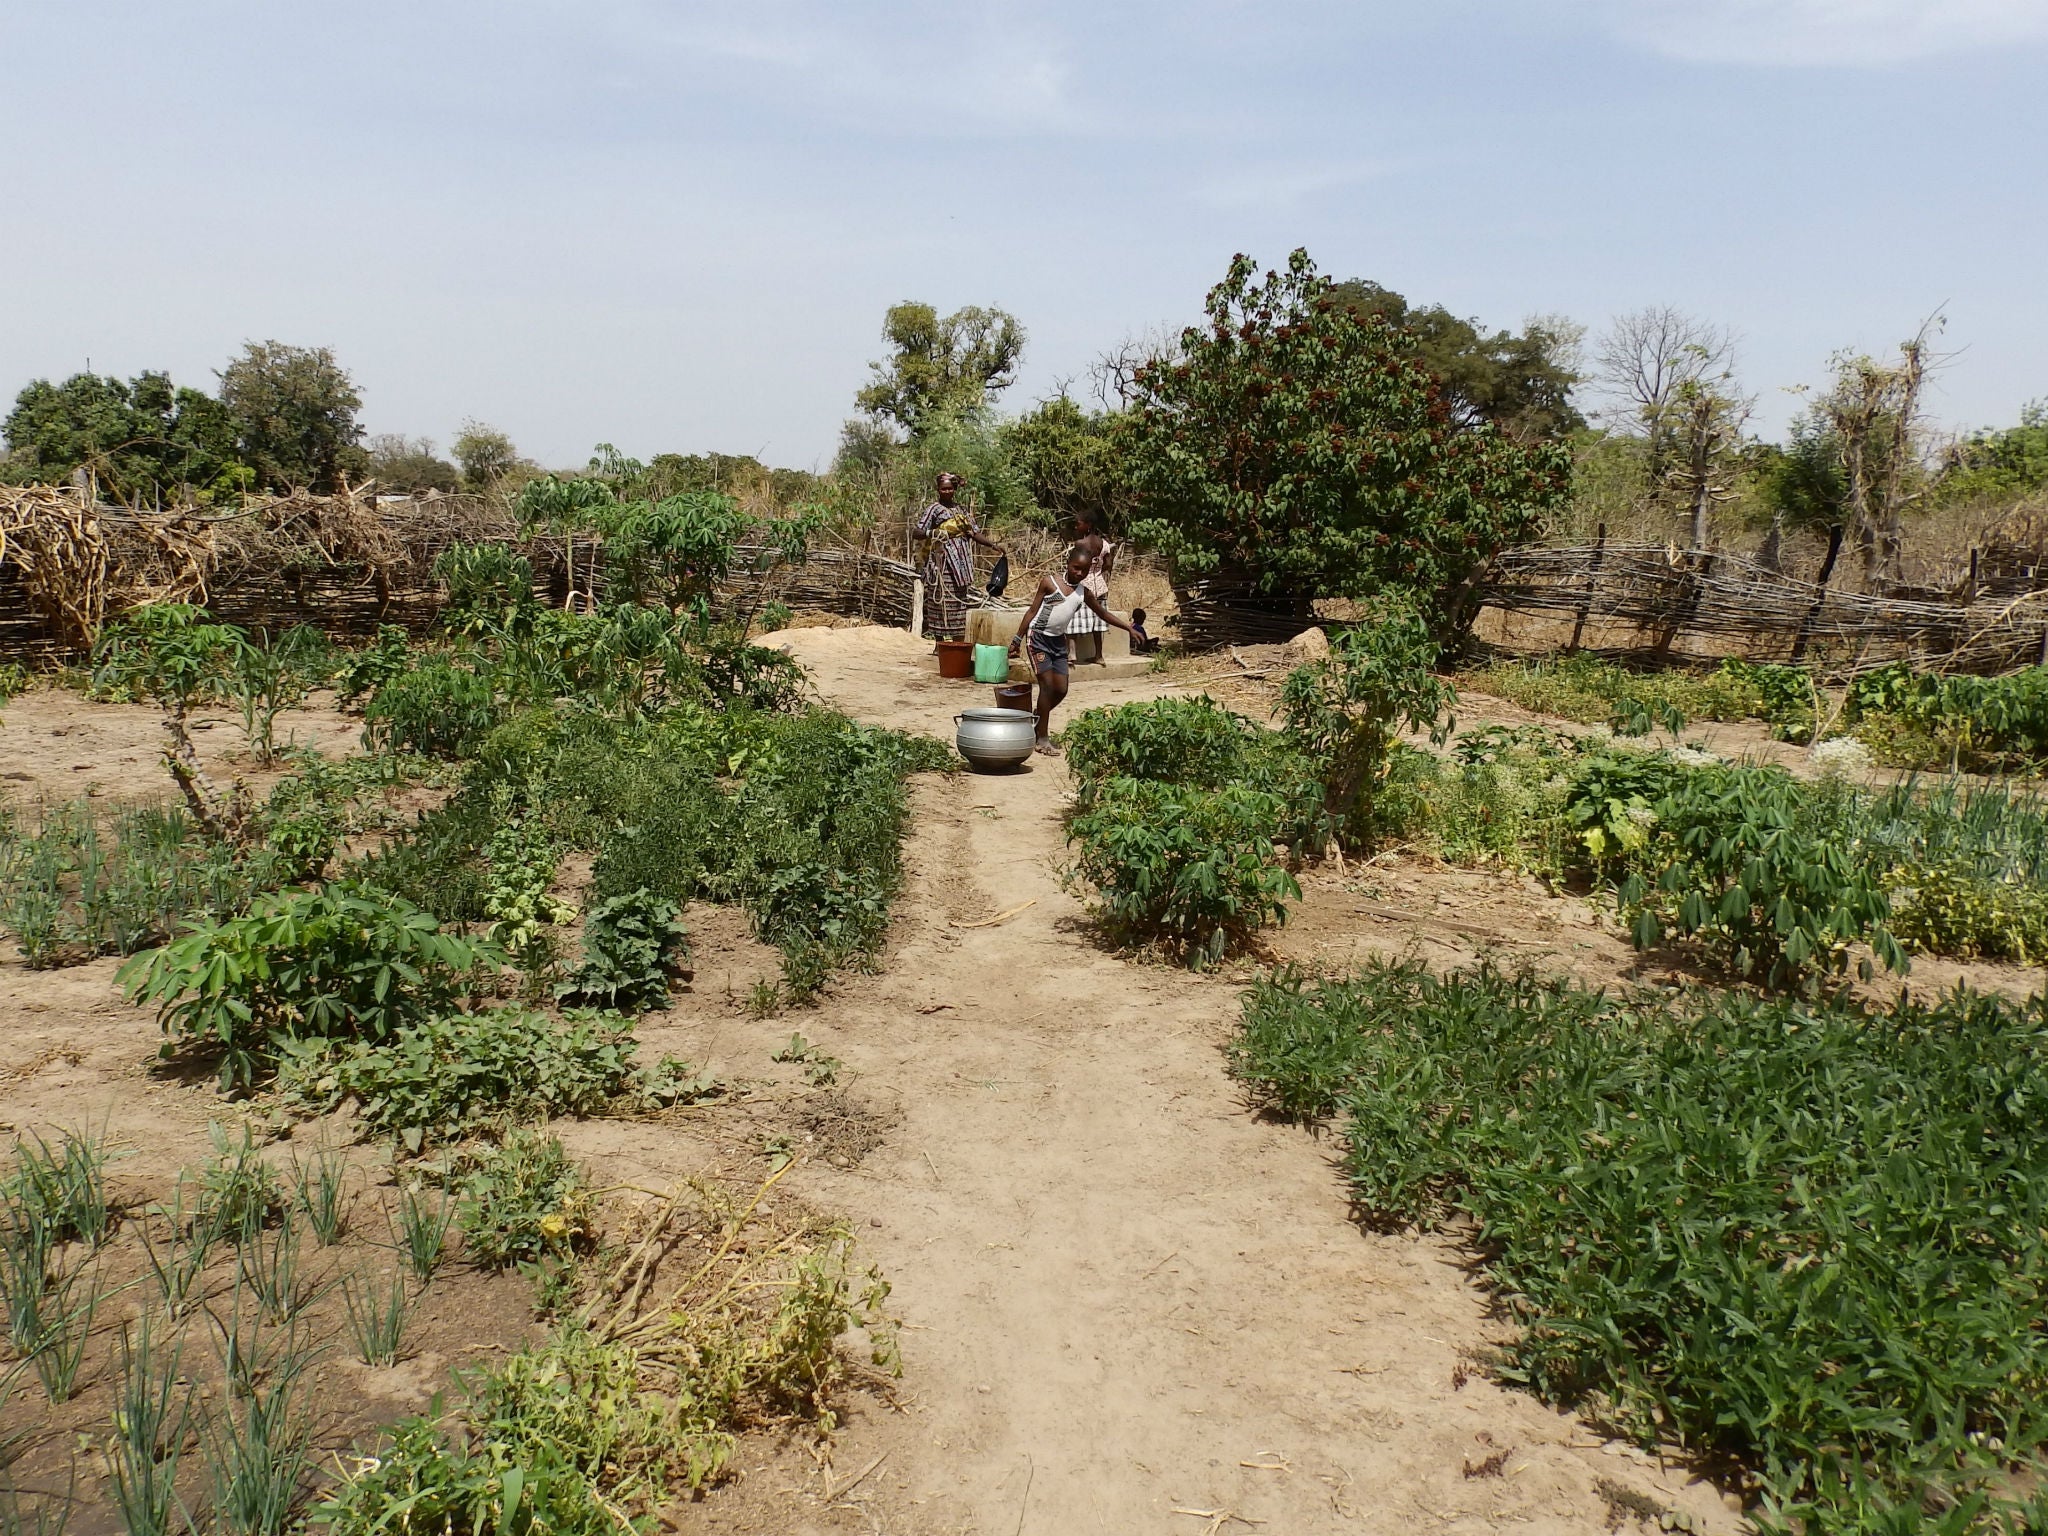 Women and children farming in Kourounan village, Kayes, Mali, on 15 March 2016.